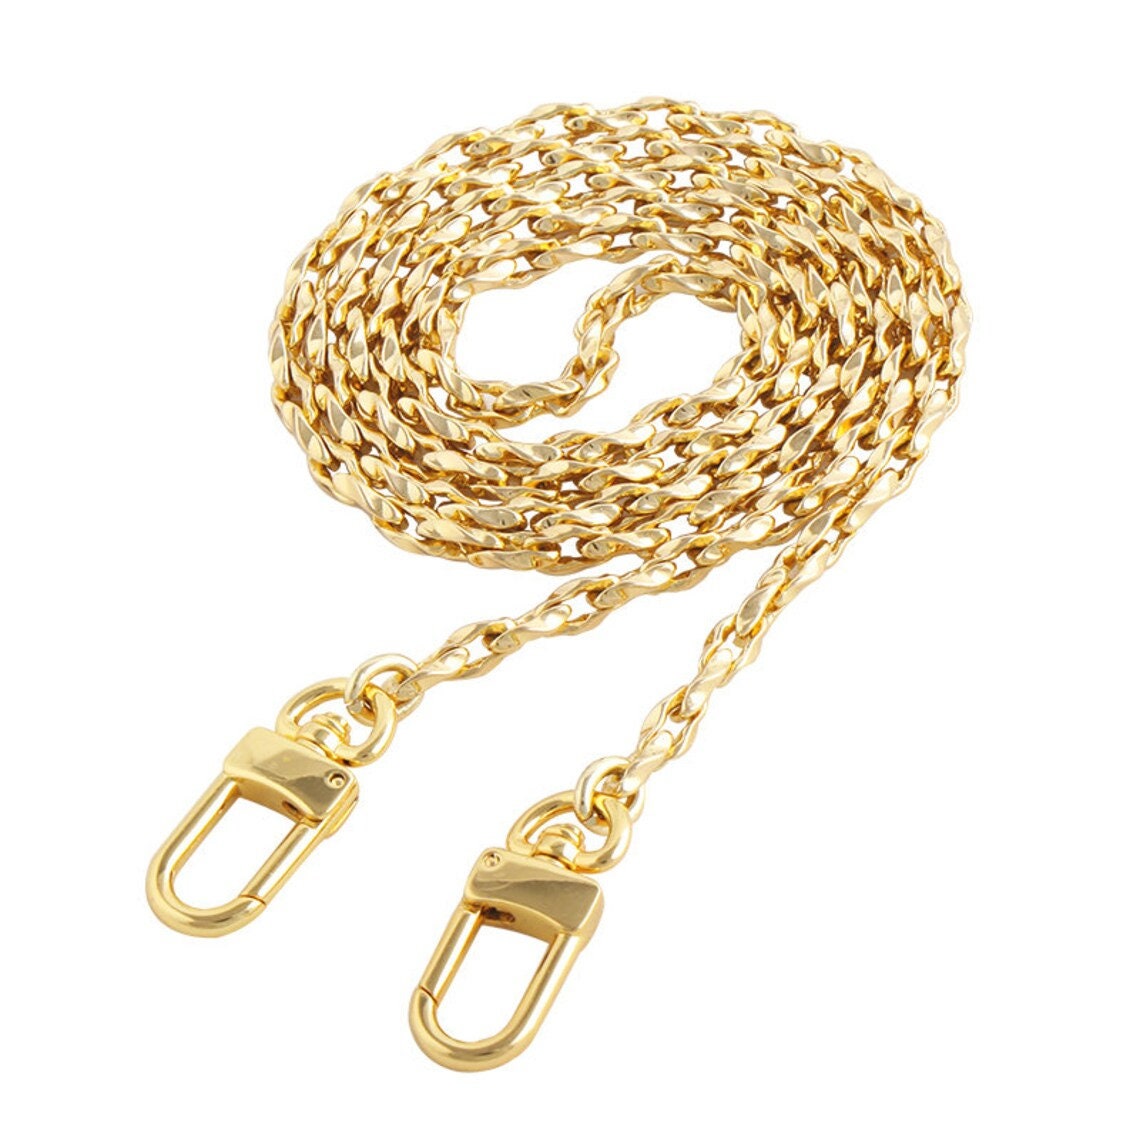 5mm Copper Crossbody Purse Chain Strap, Gold Metal Shoulder